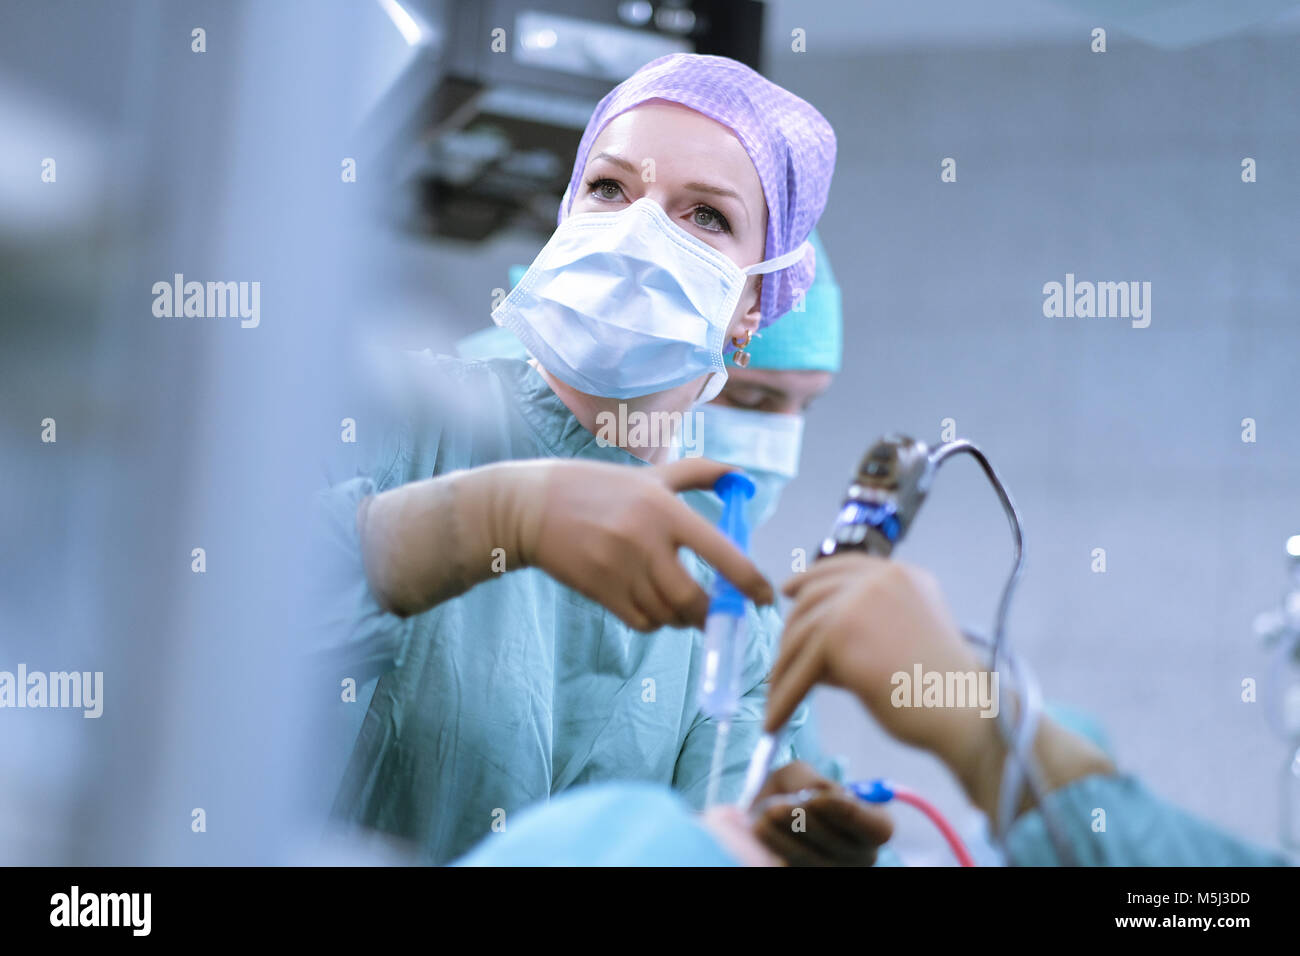 Neurosurgeon in scrubs during an operation Stock Photo